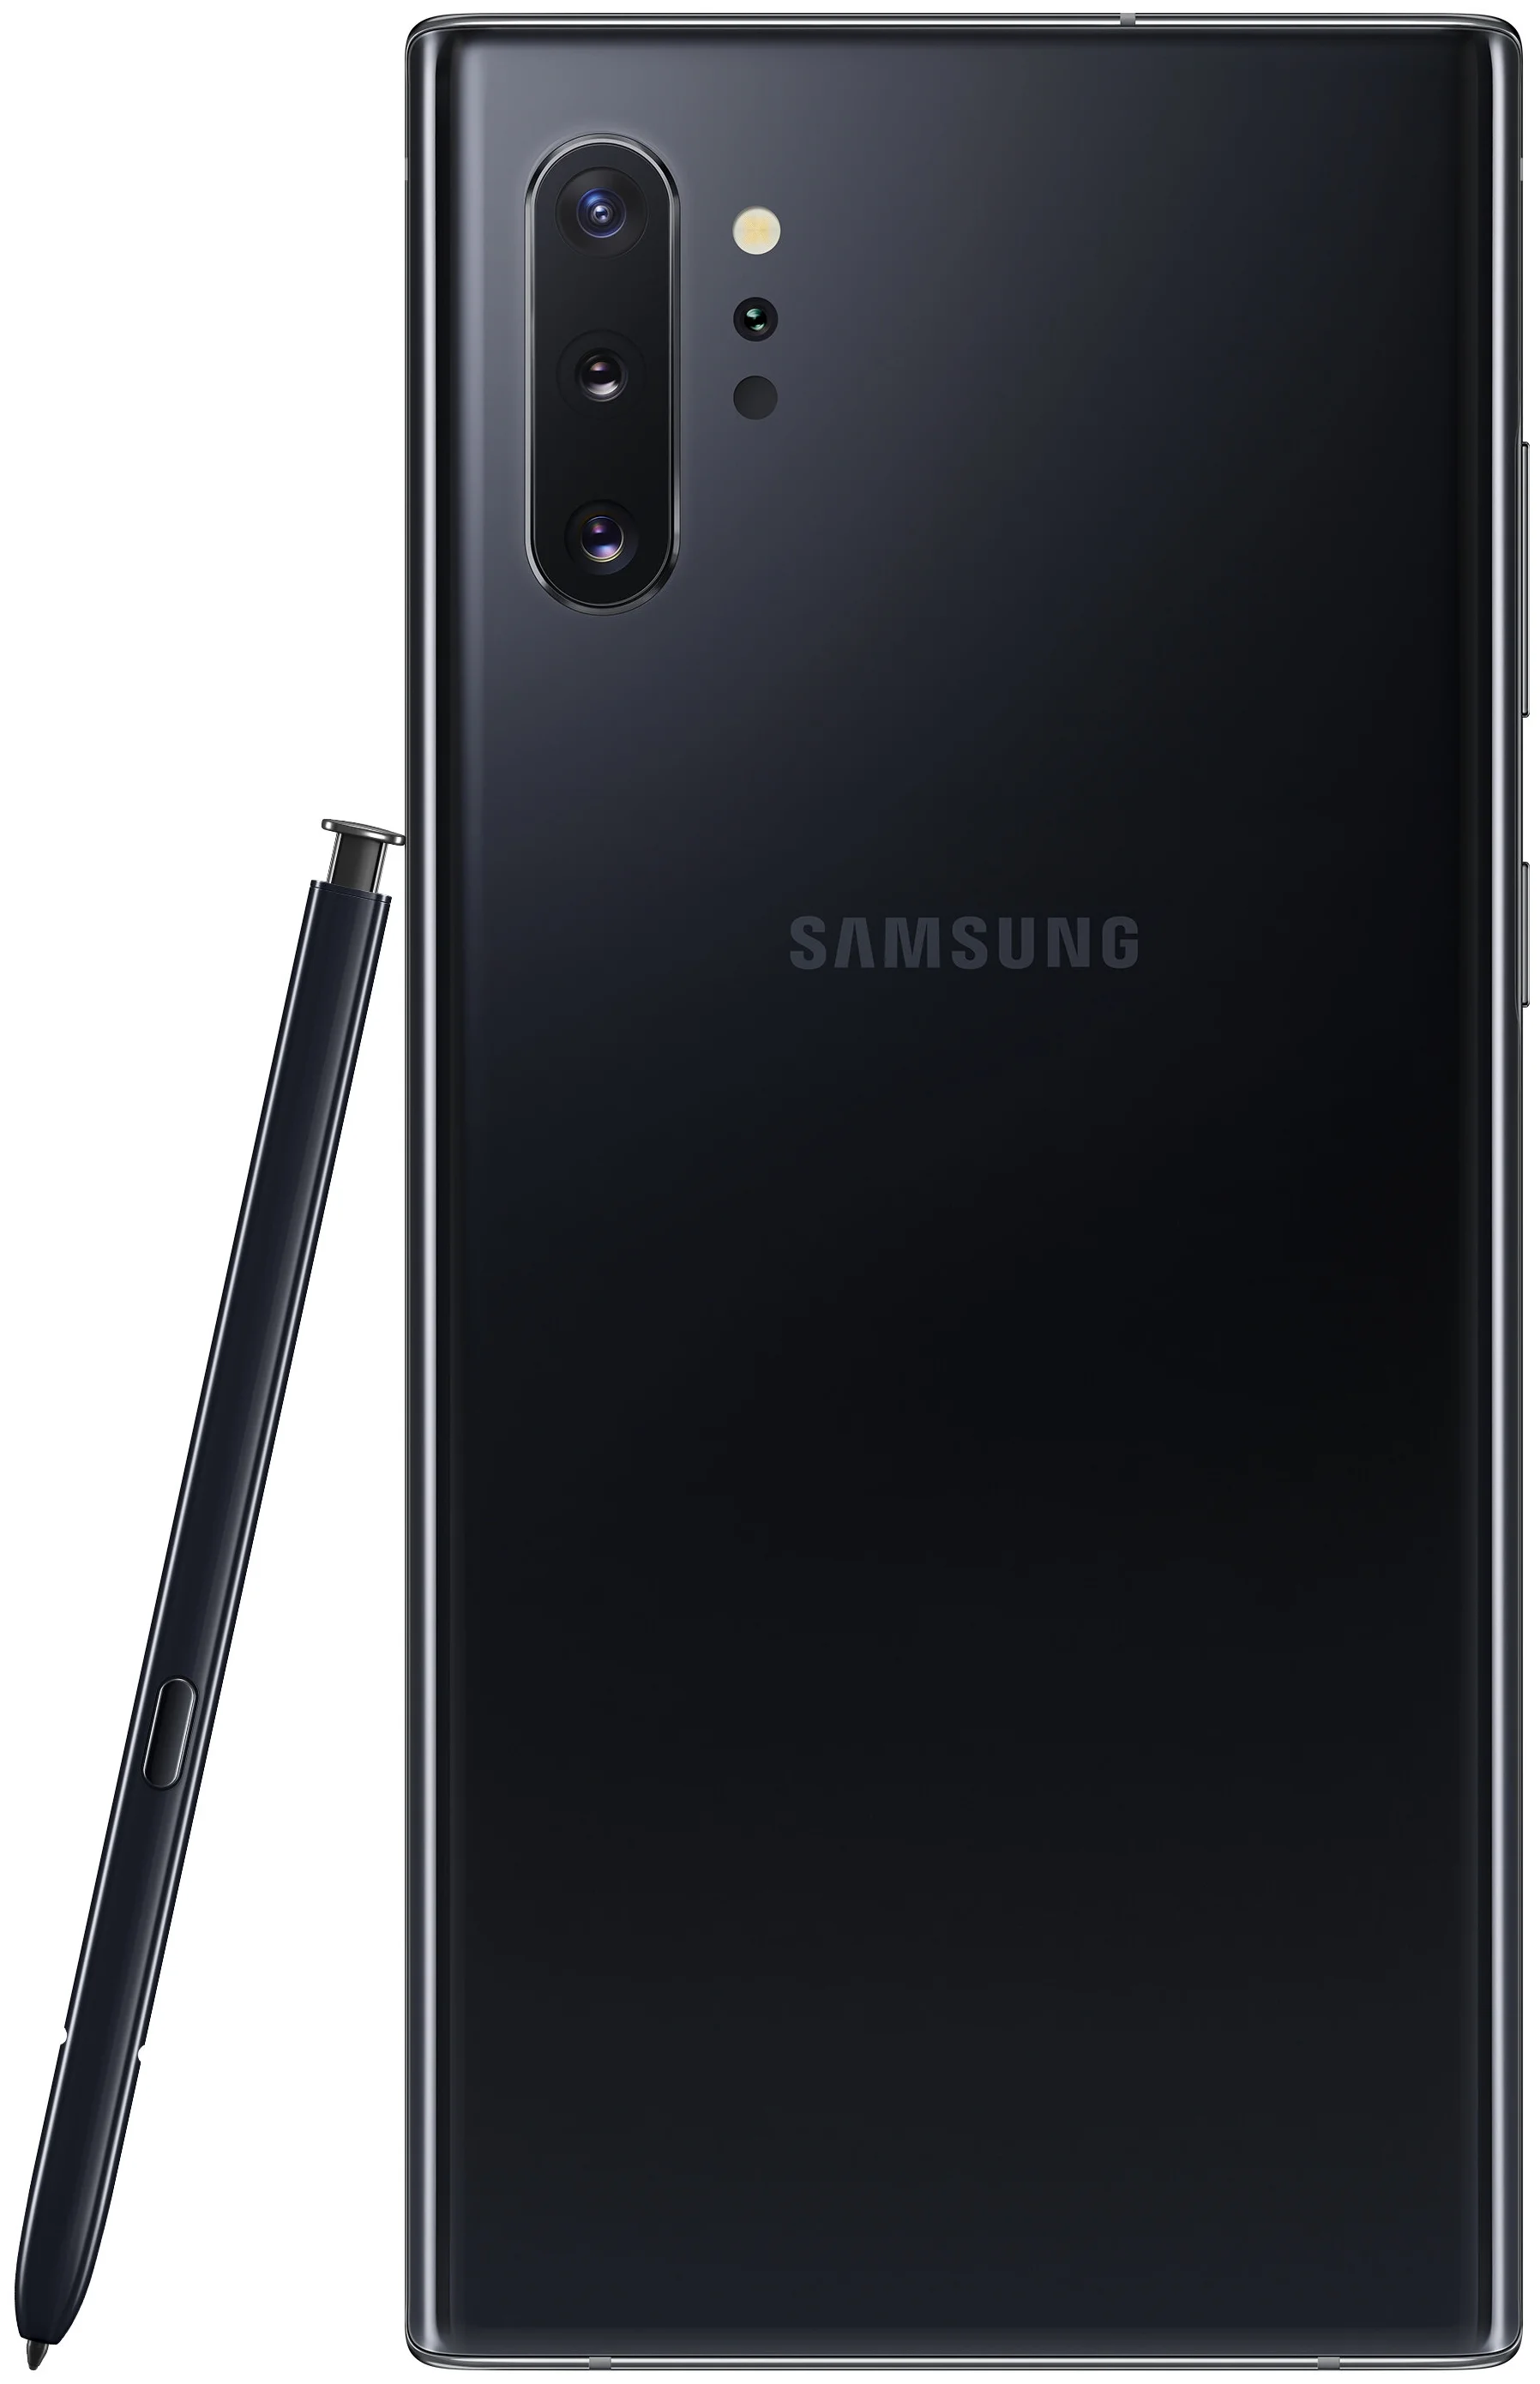 Samsung Galaxy Note 10+ 12/256GB - операционная система: Android 9.0